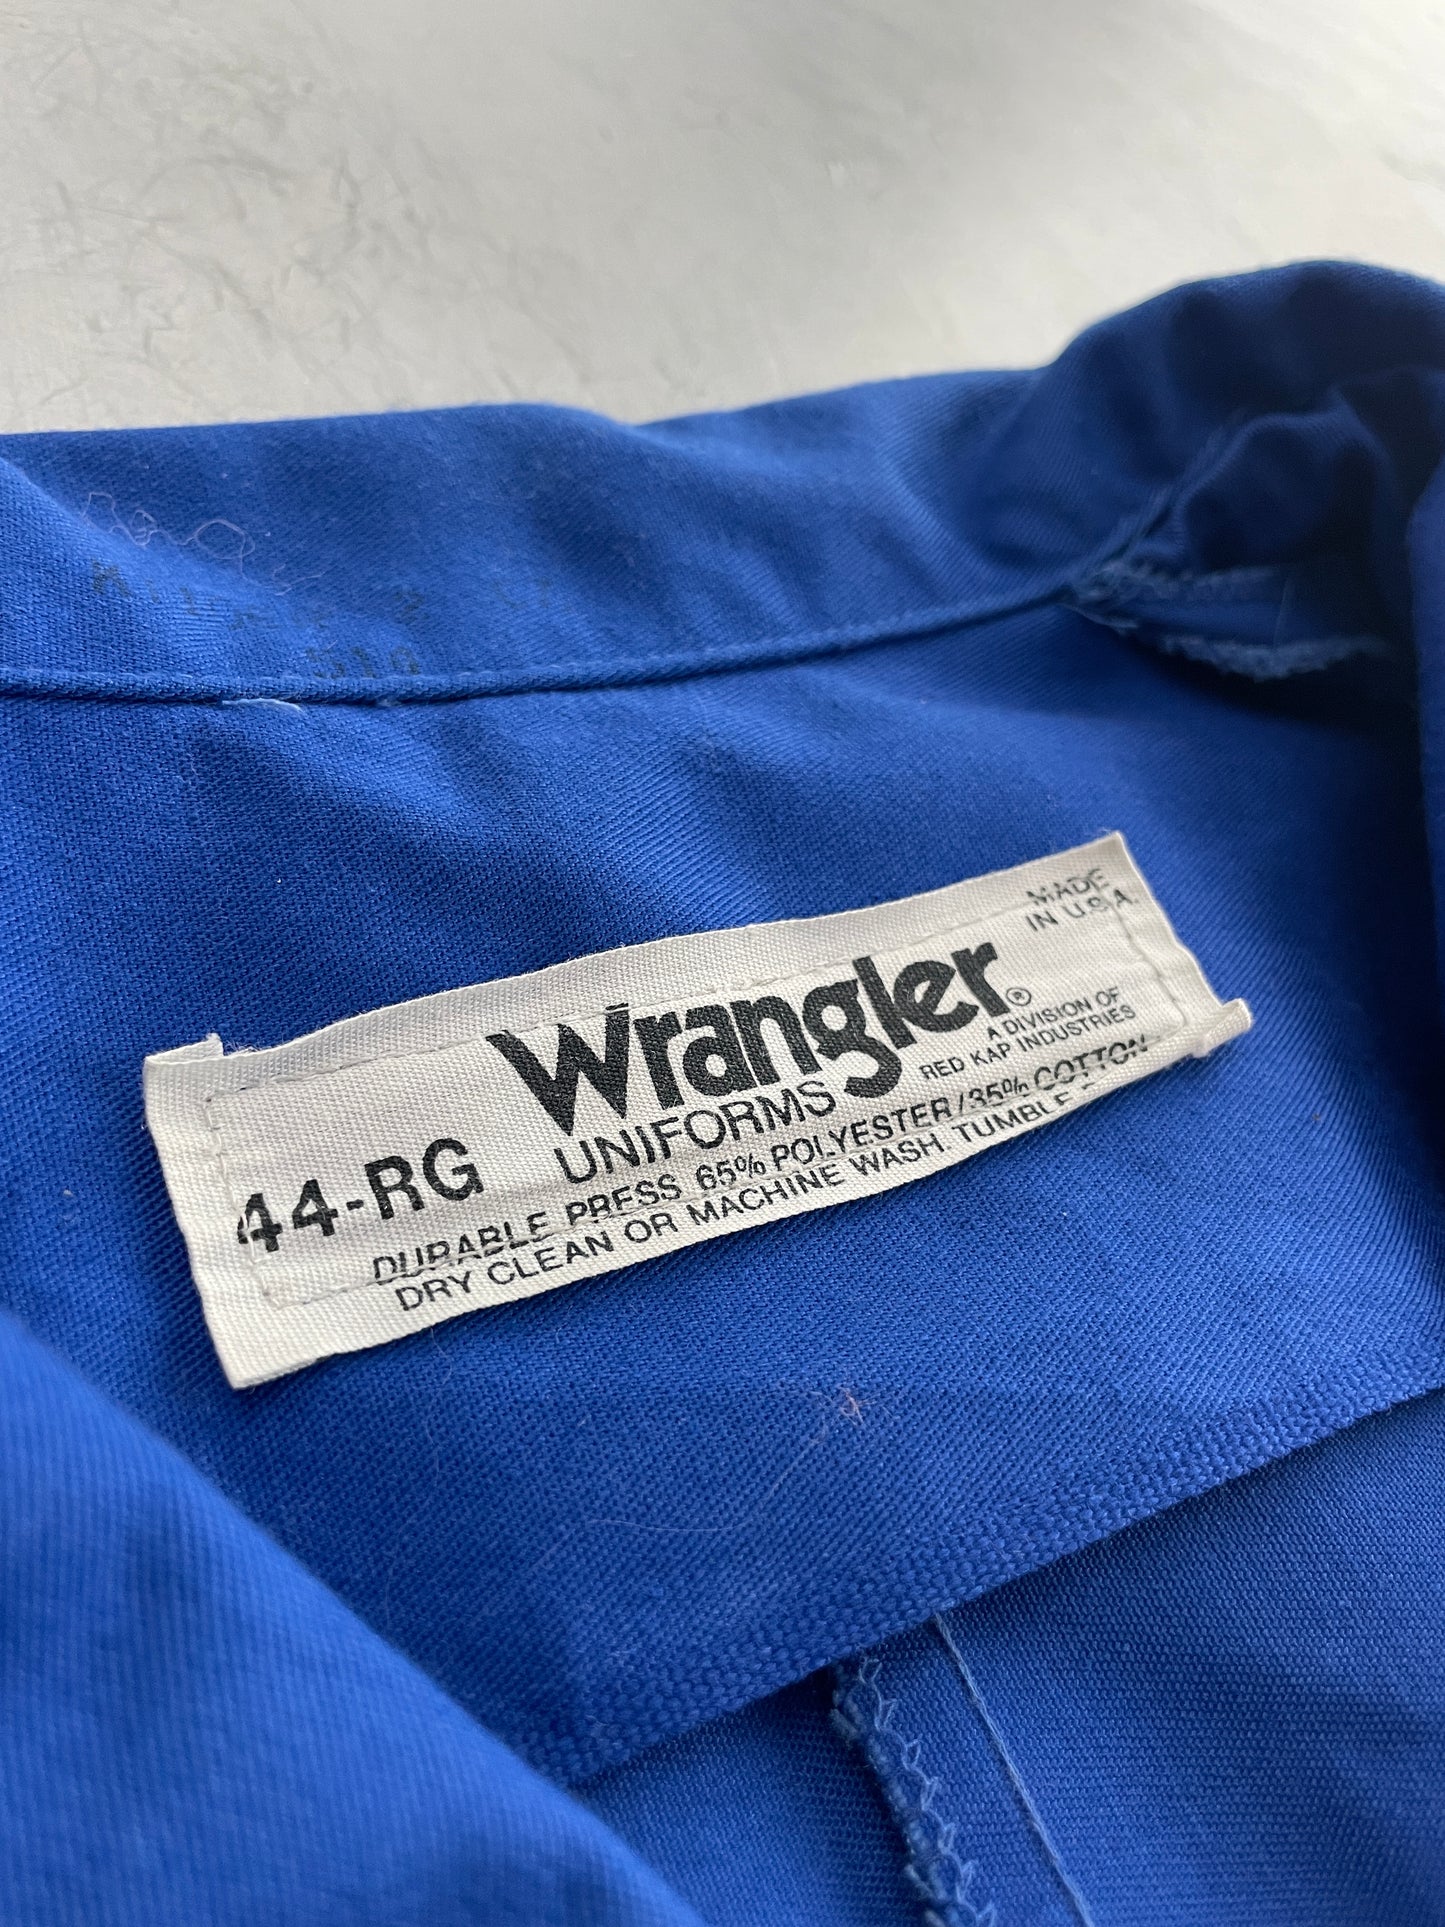 Wrangler Chainstitch Work Jacket [L/XL]